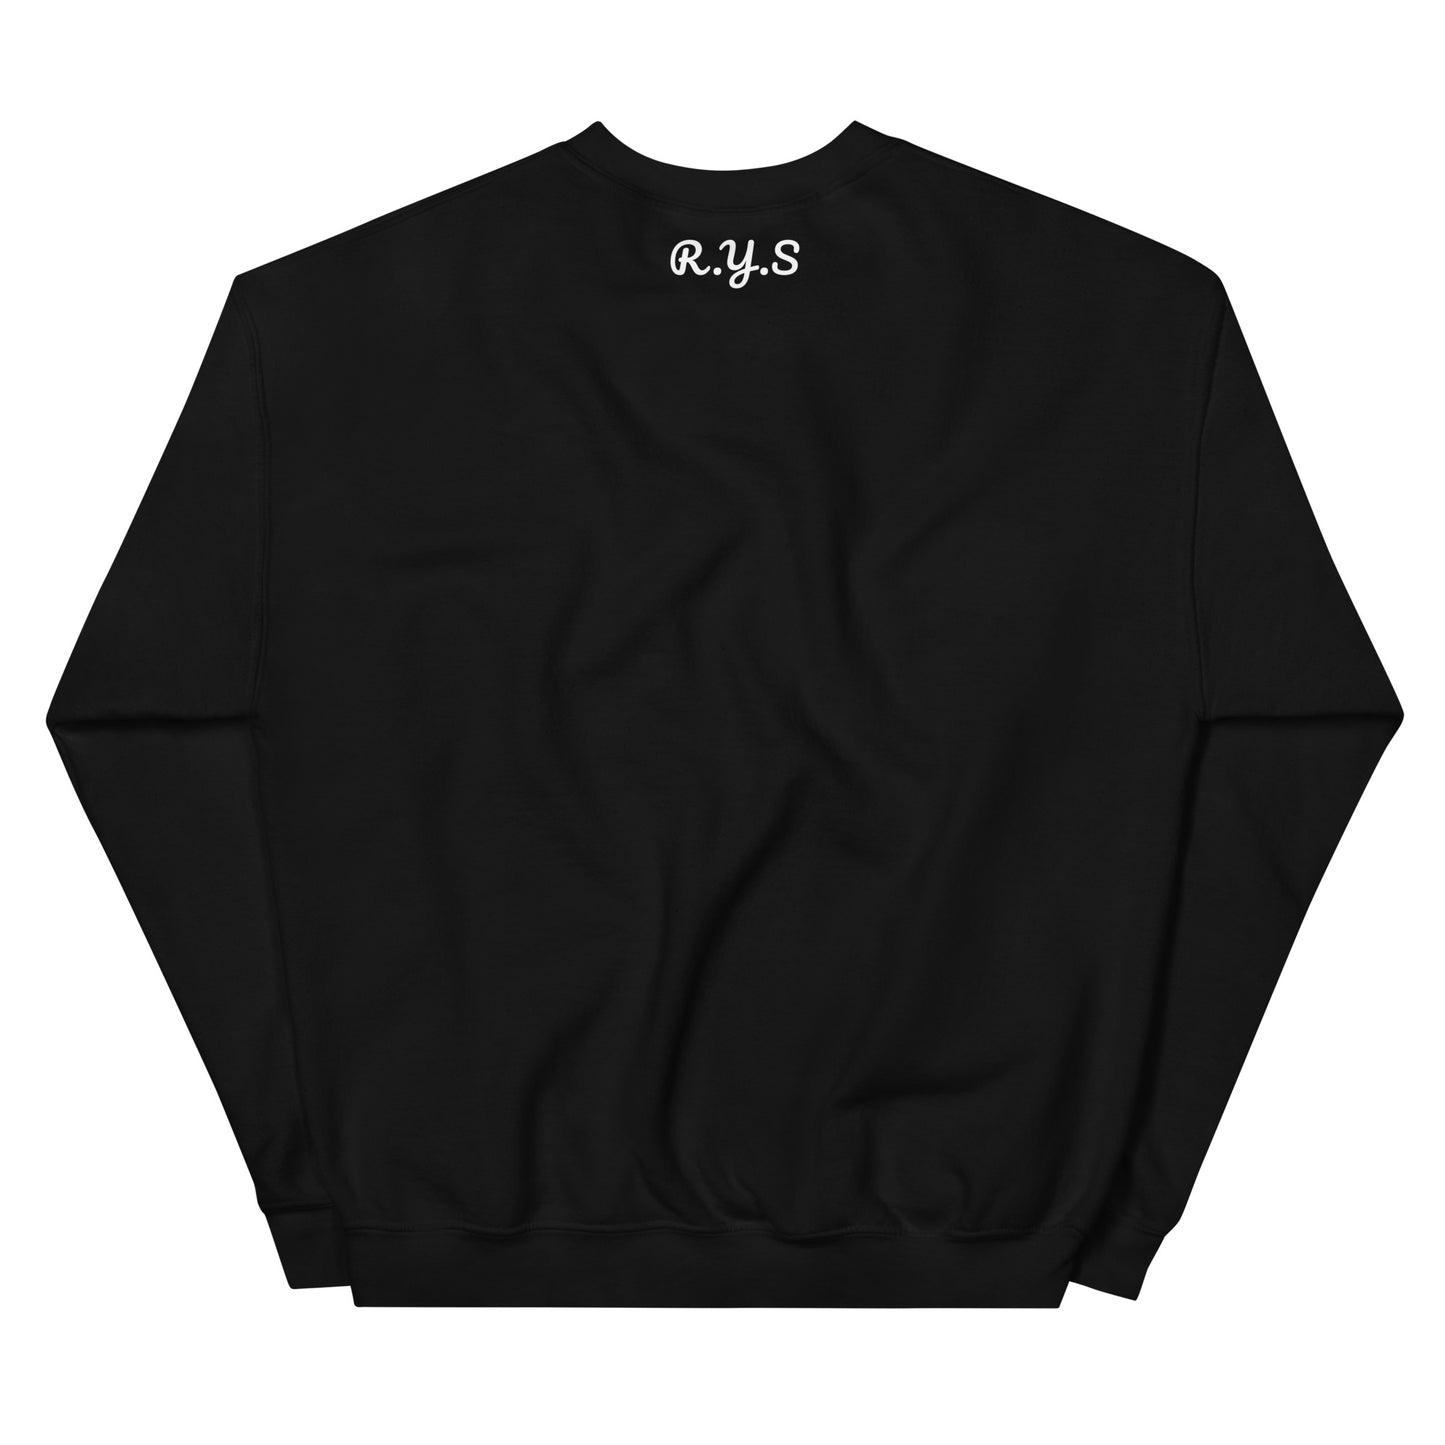 Unisex black sweatshirt